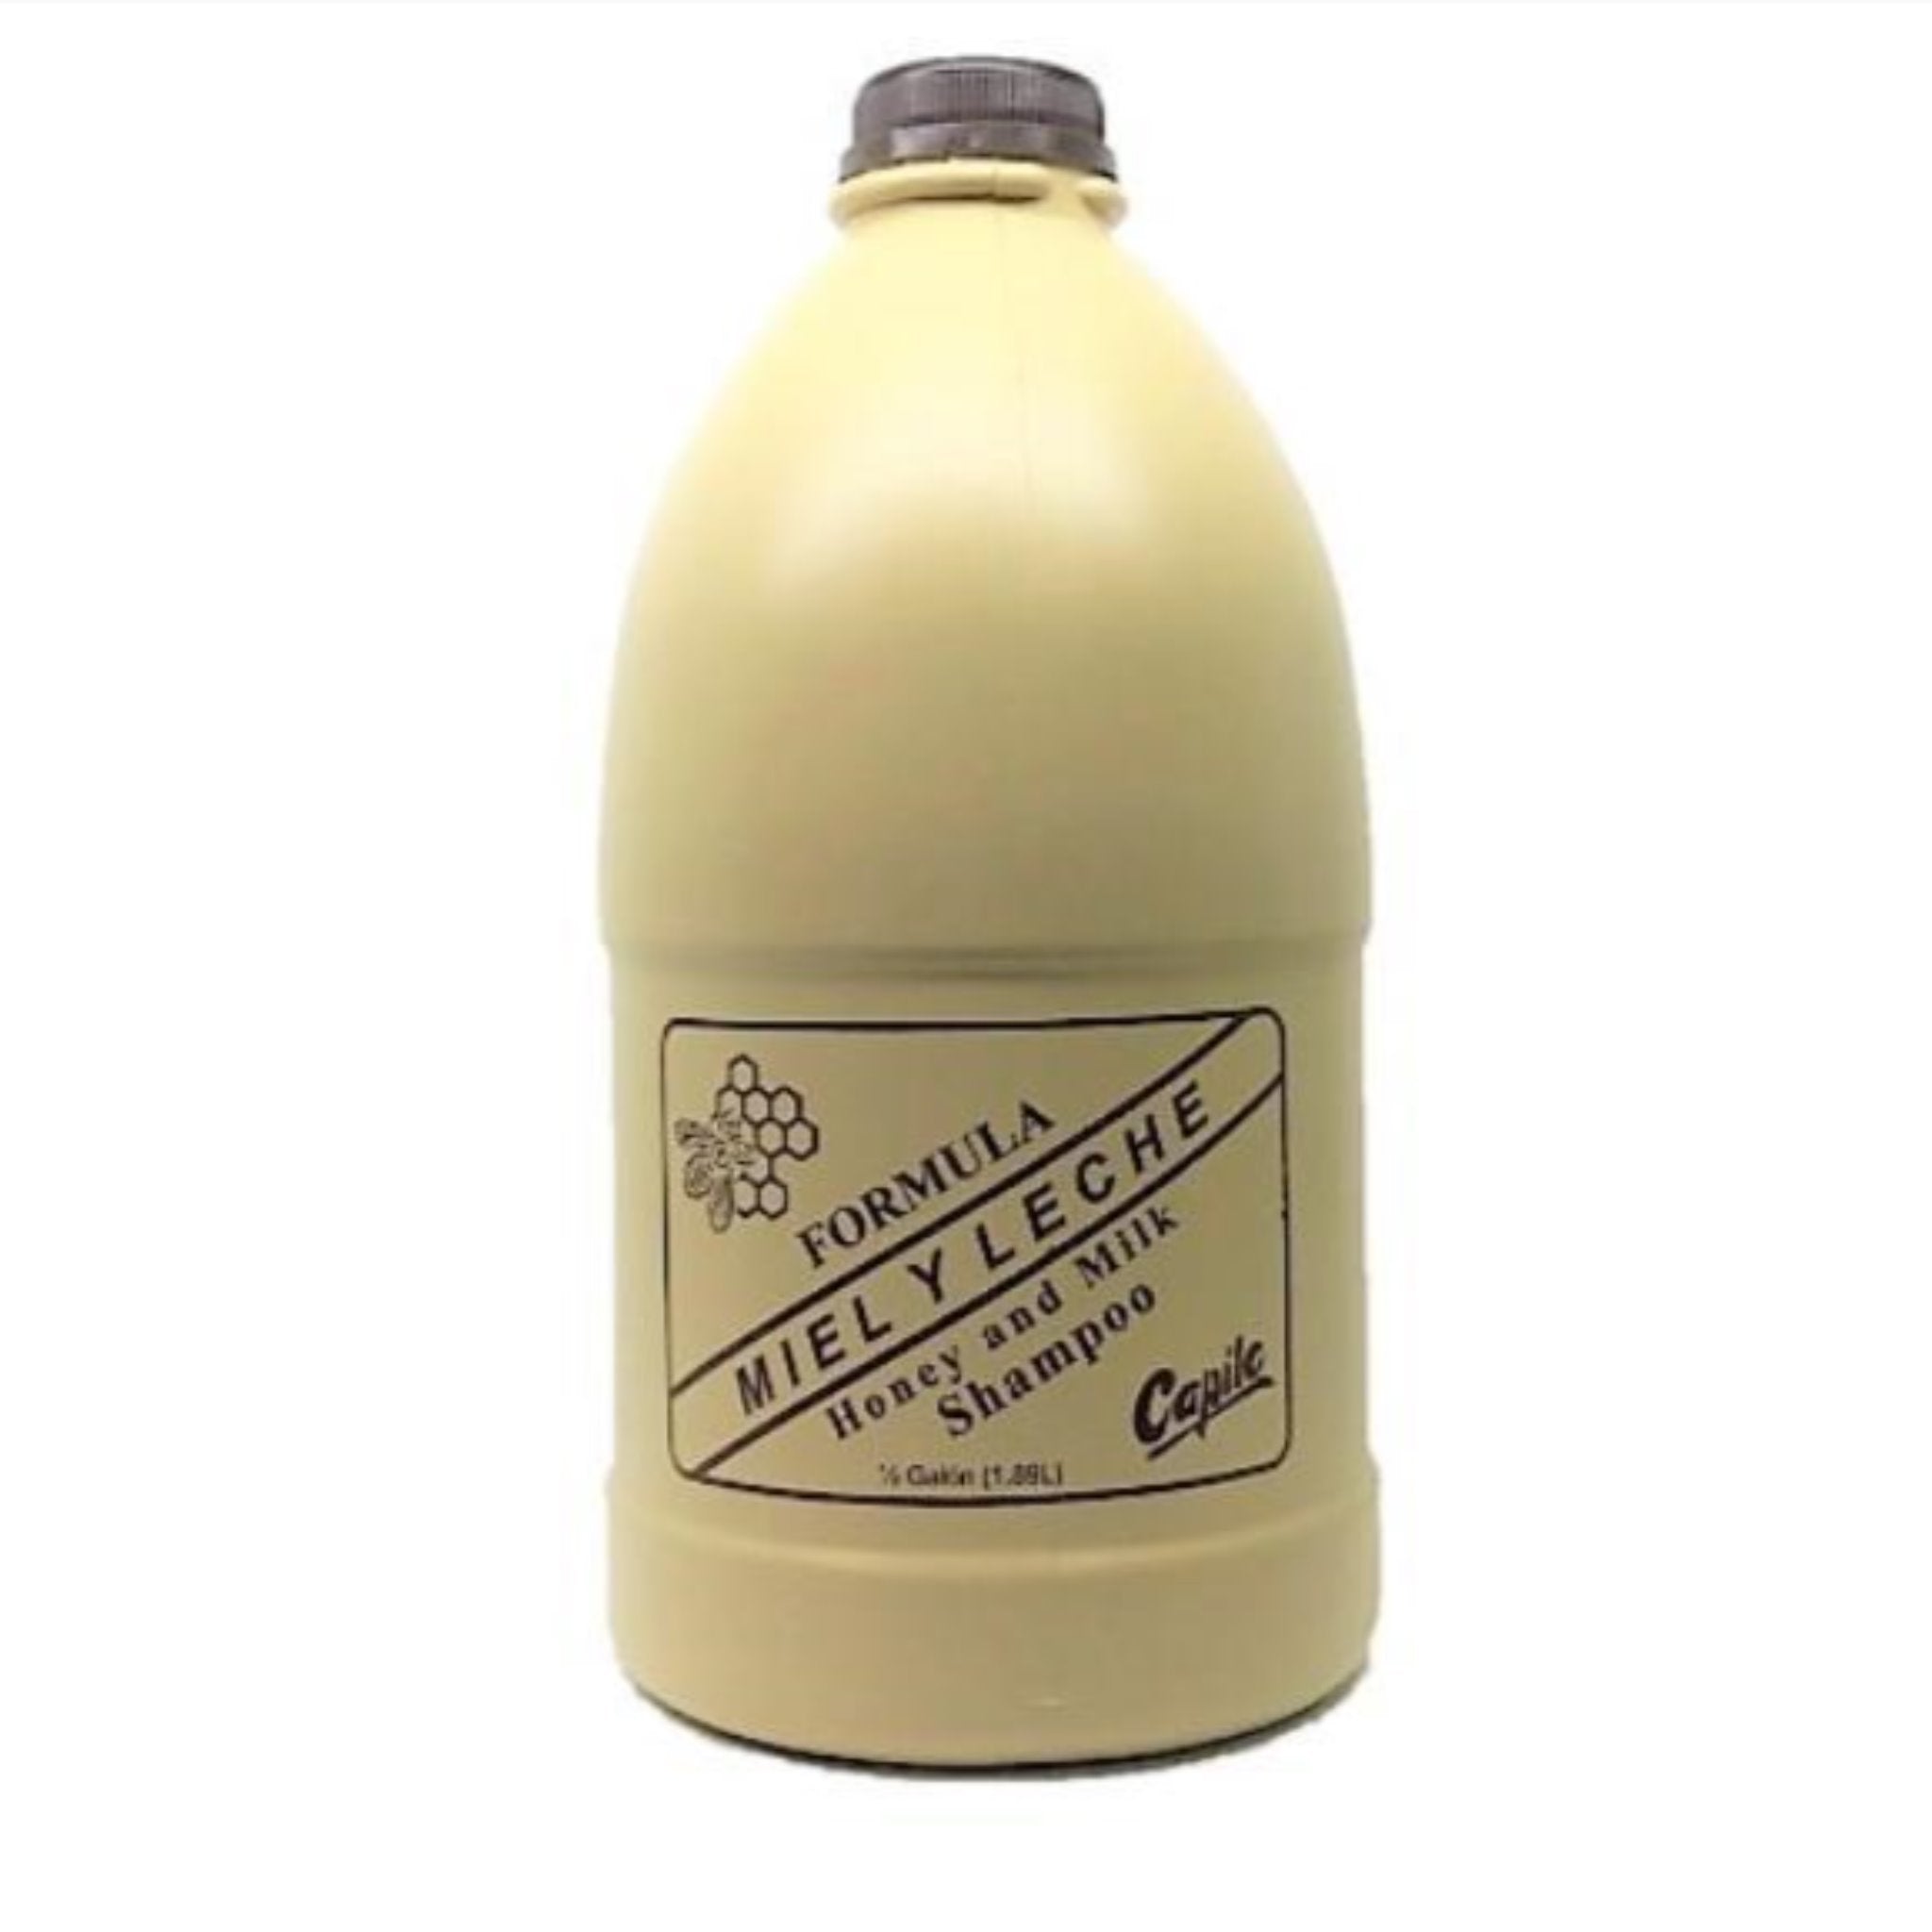 Capilo Milk & Honey Shampoo 1/2 Gallon